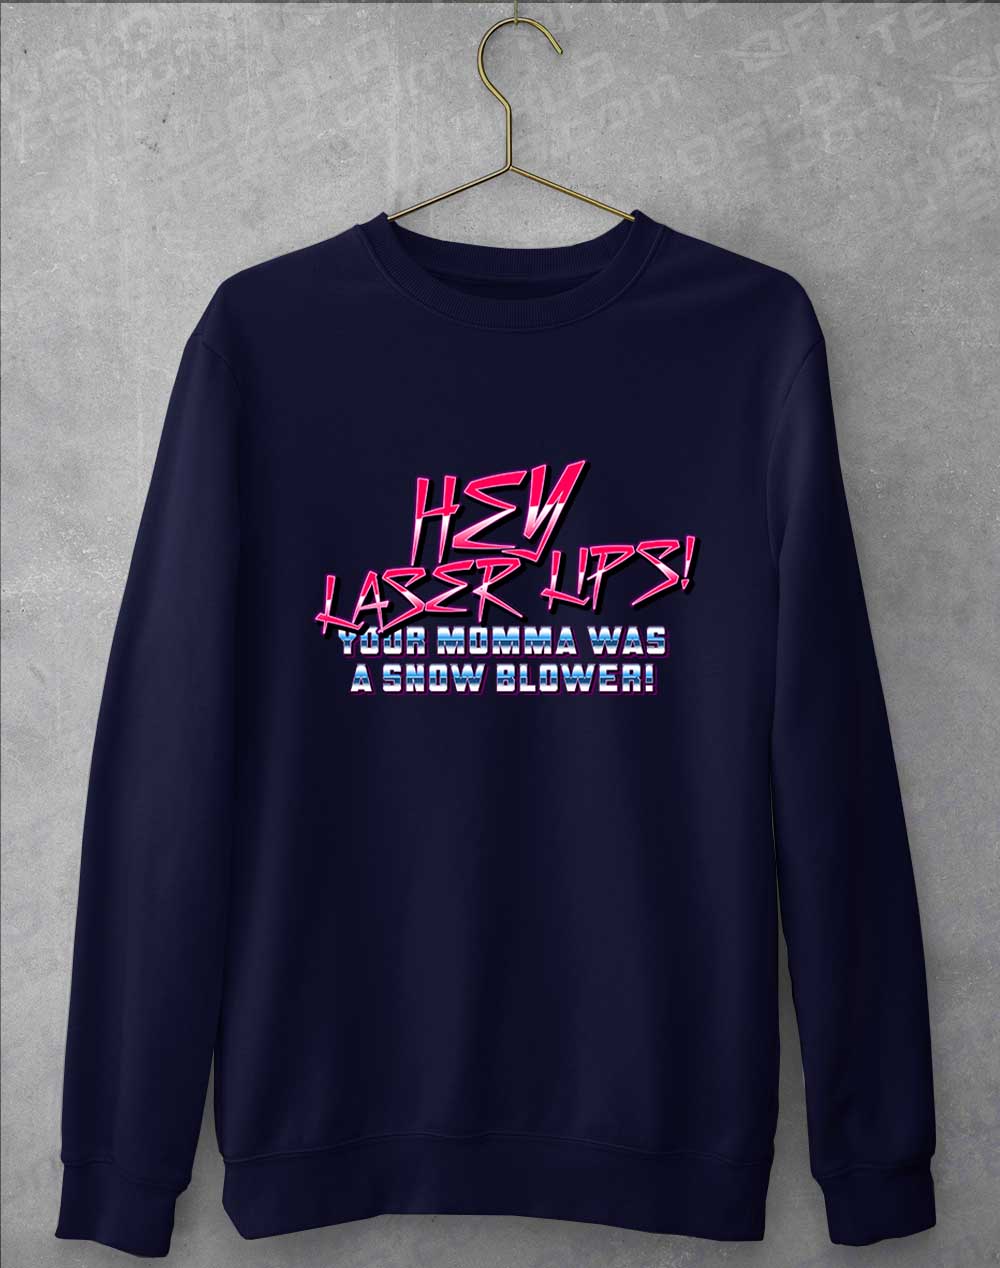 Oxford Navy - Hey Laser Lips Sweatshirt